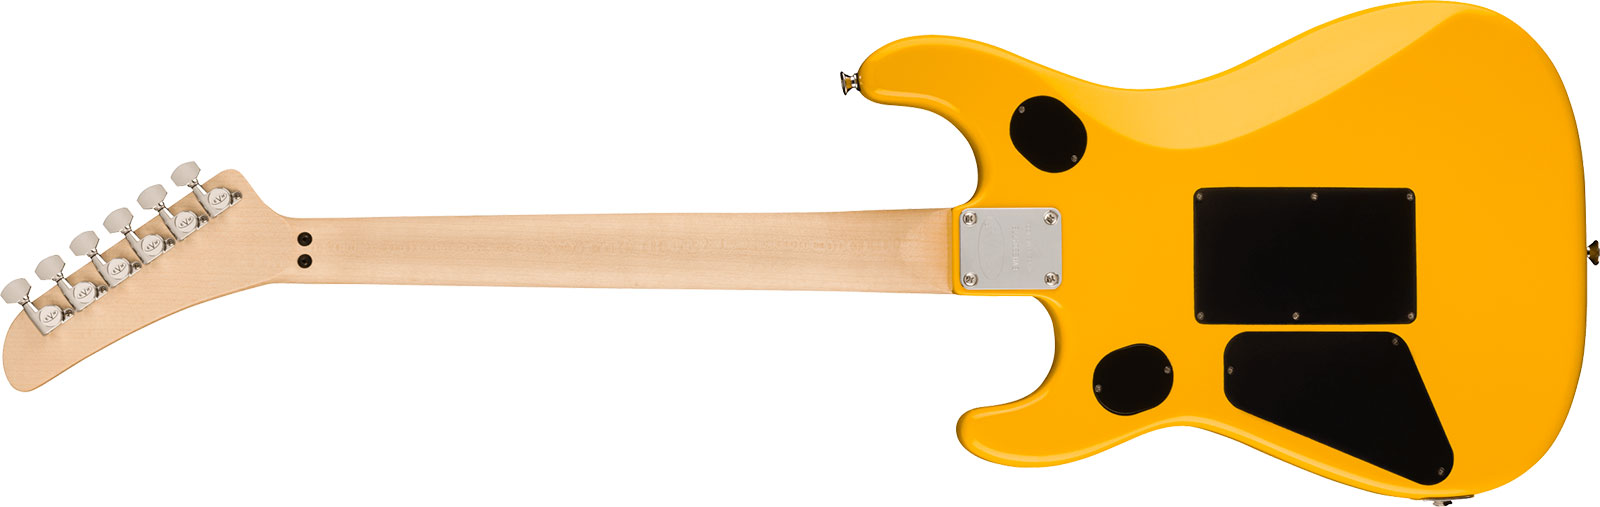 Evh 5150 Standard Mex 2h Fr Eb - Evh Yellow - Str shape electric guitar - Variation 1